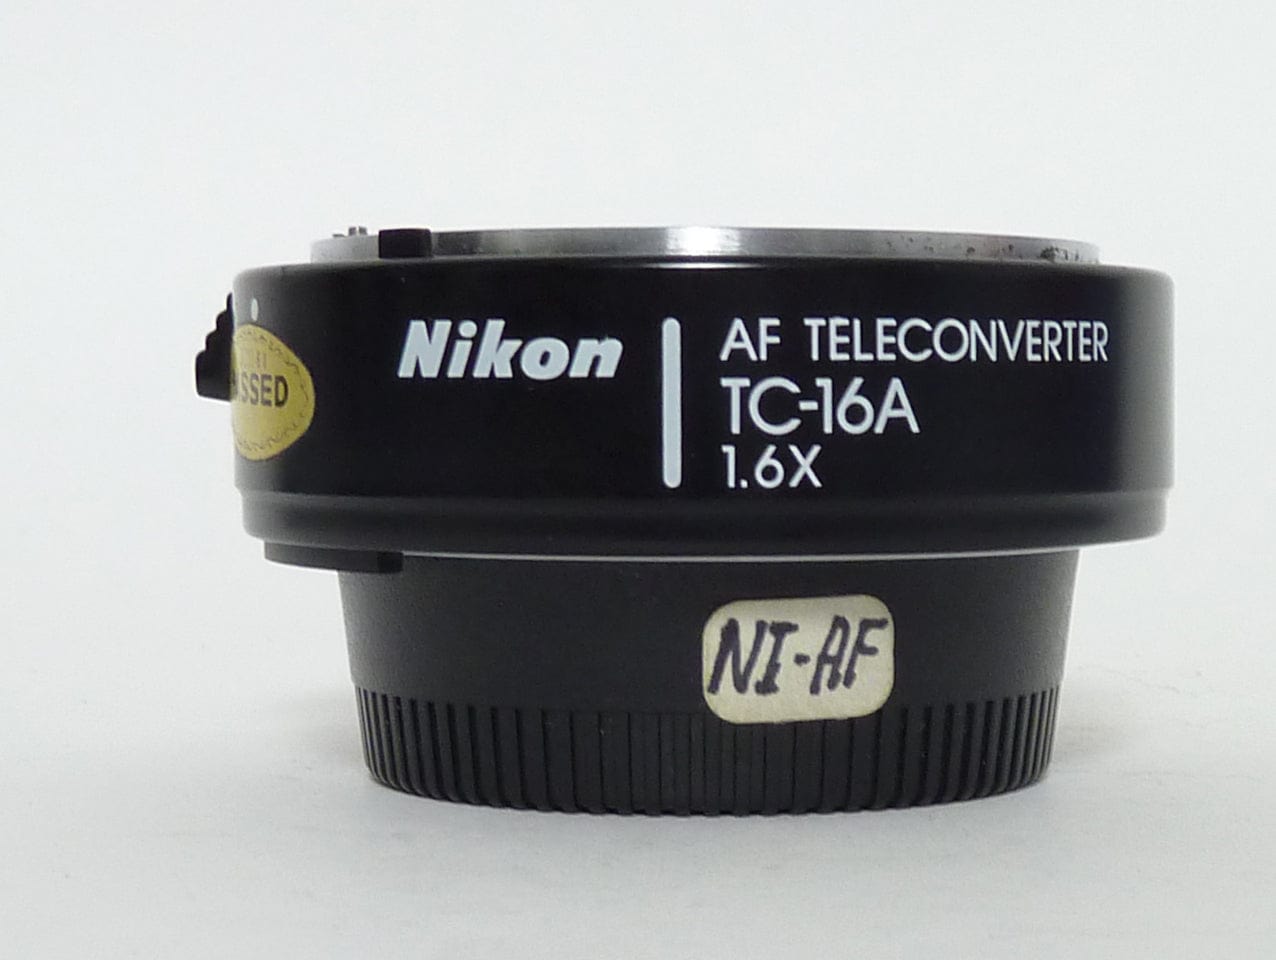 Nikon TC-16A 1.6X AF Tele Converter